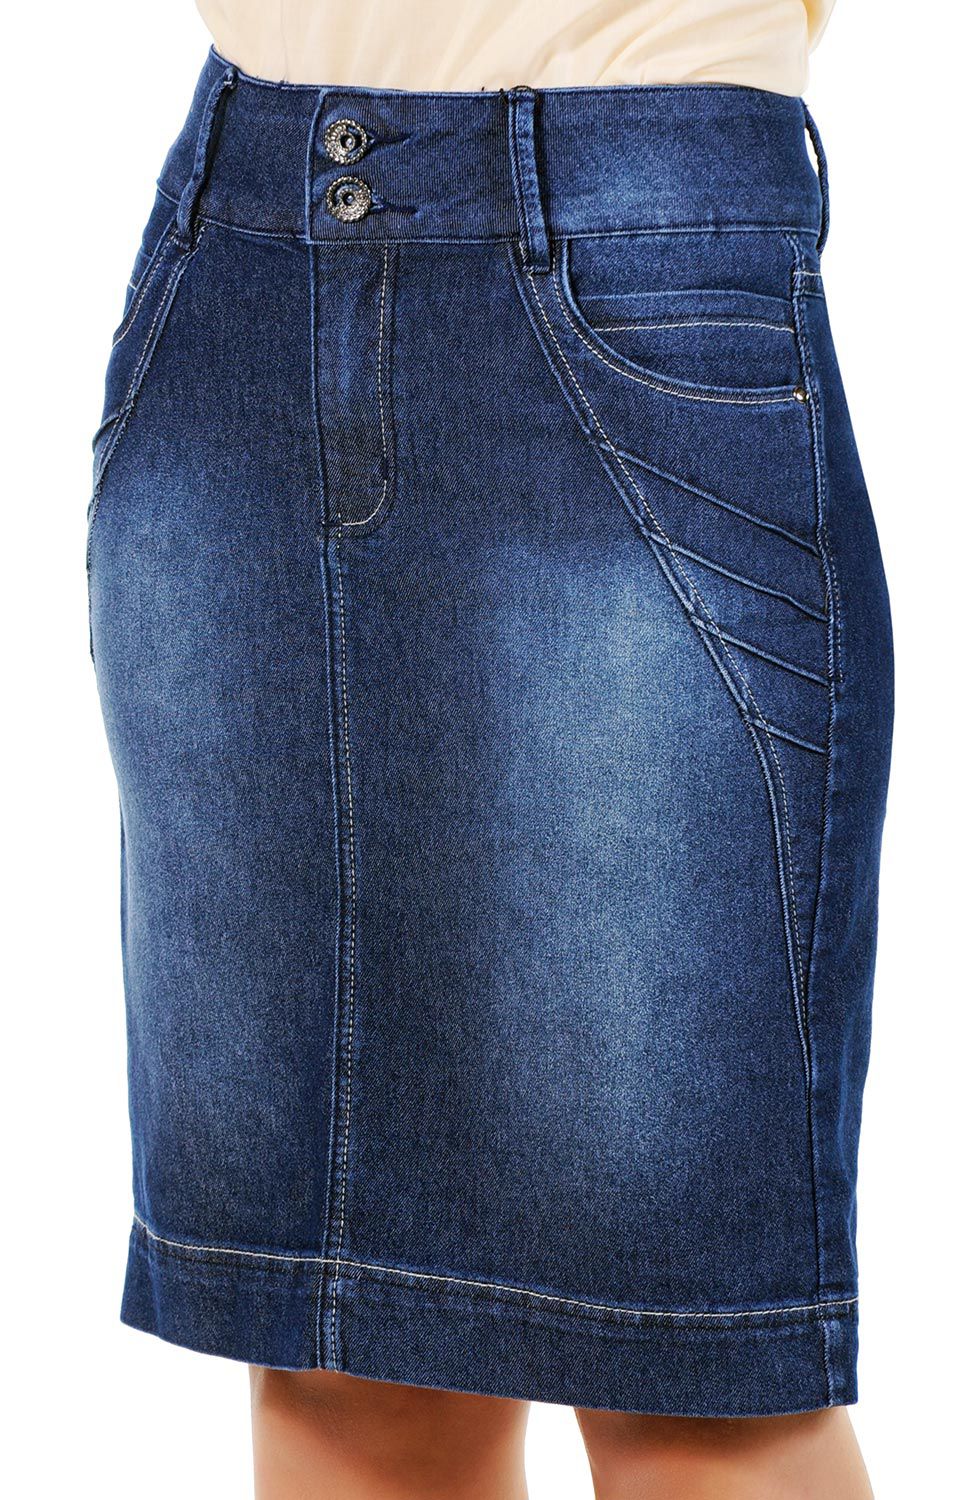 Saia Jeans Midi com Used e Recortes com Nervuras Dyork Jeans